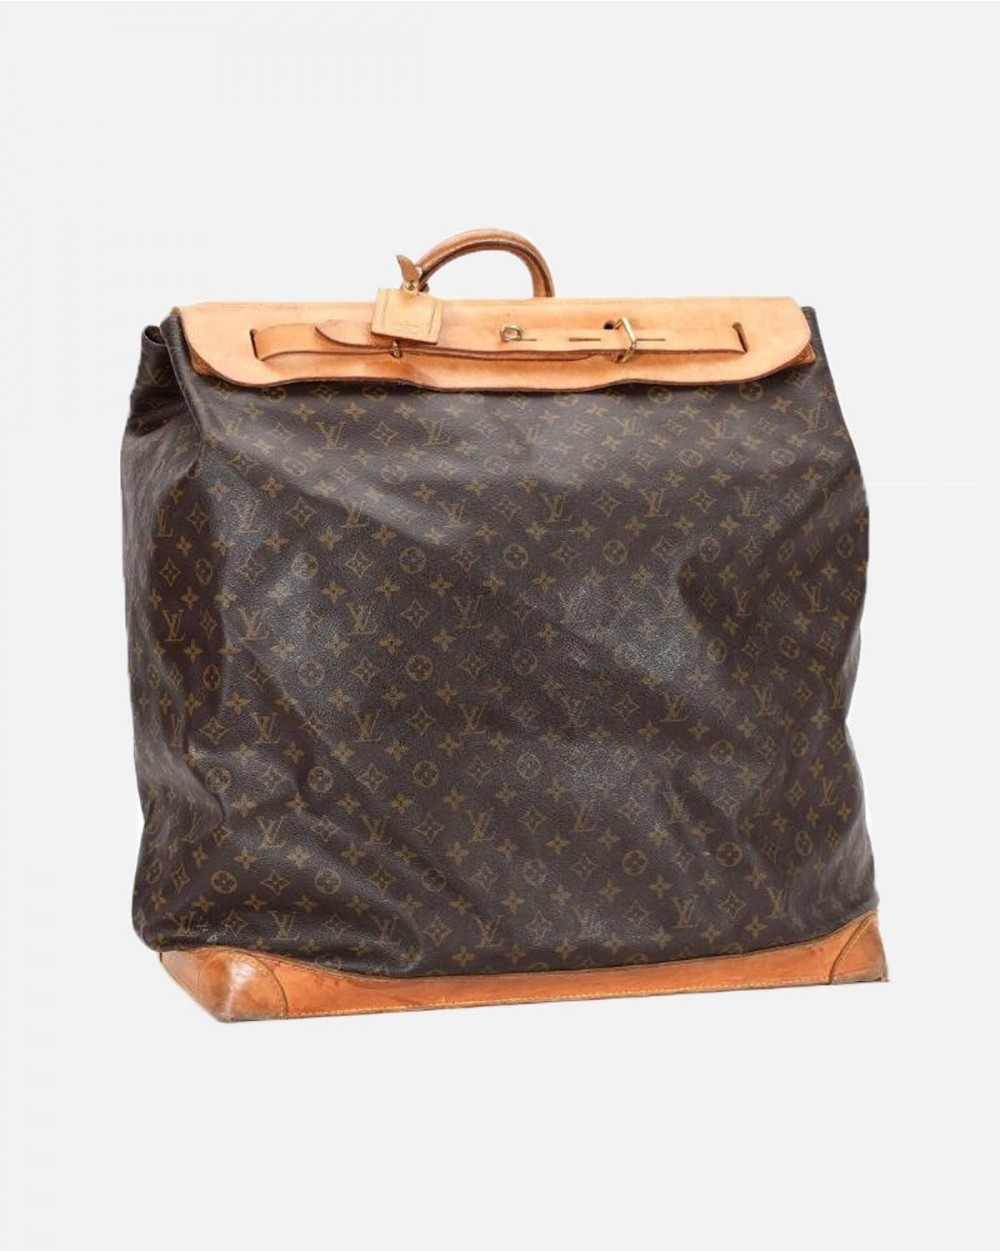 Louis Vuitton streamer bag